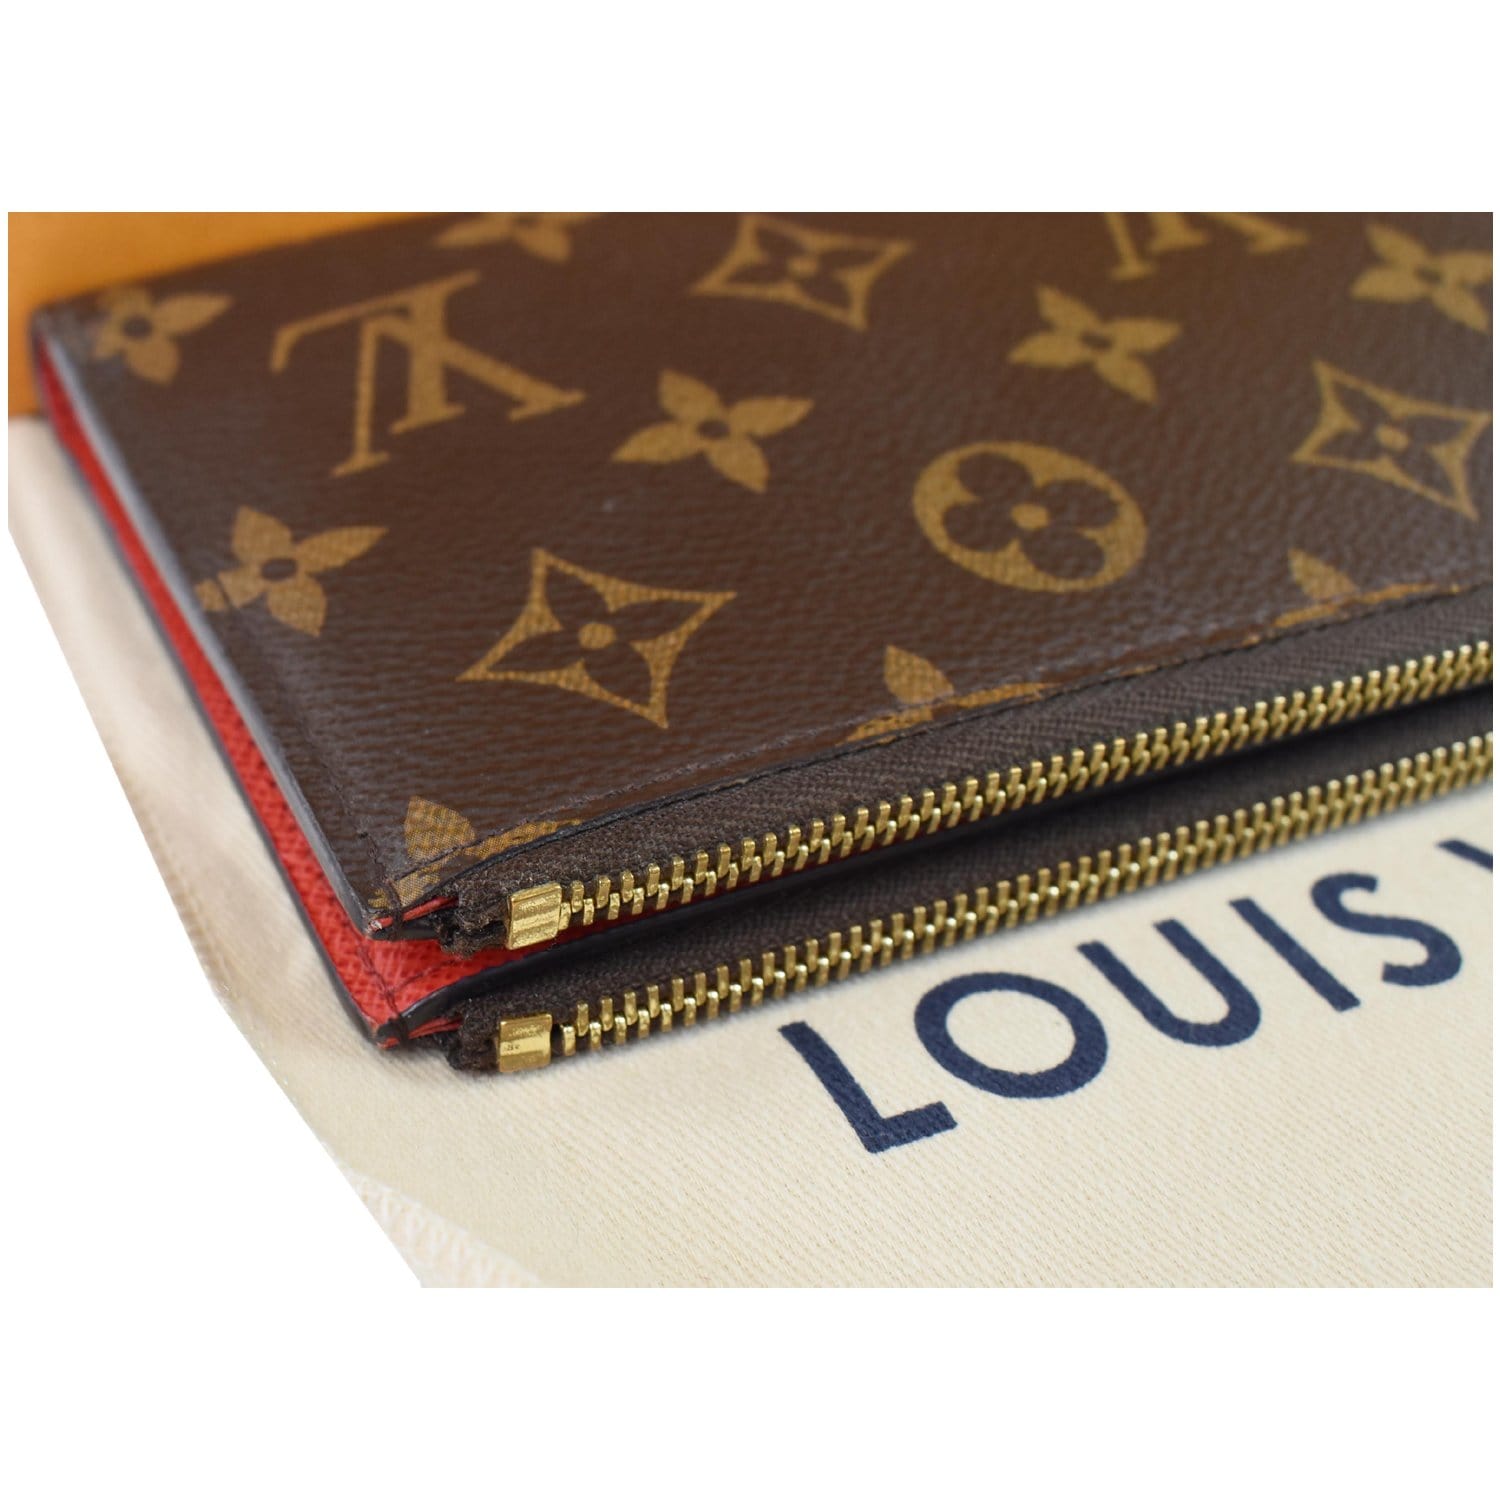 Louis Vuitton Adele Wallet